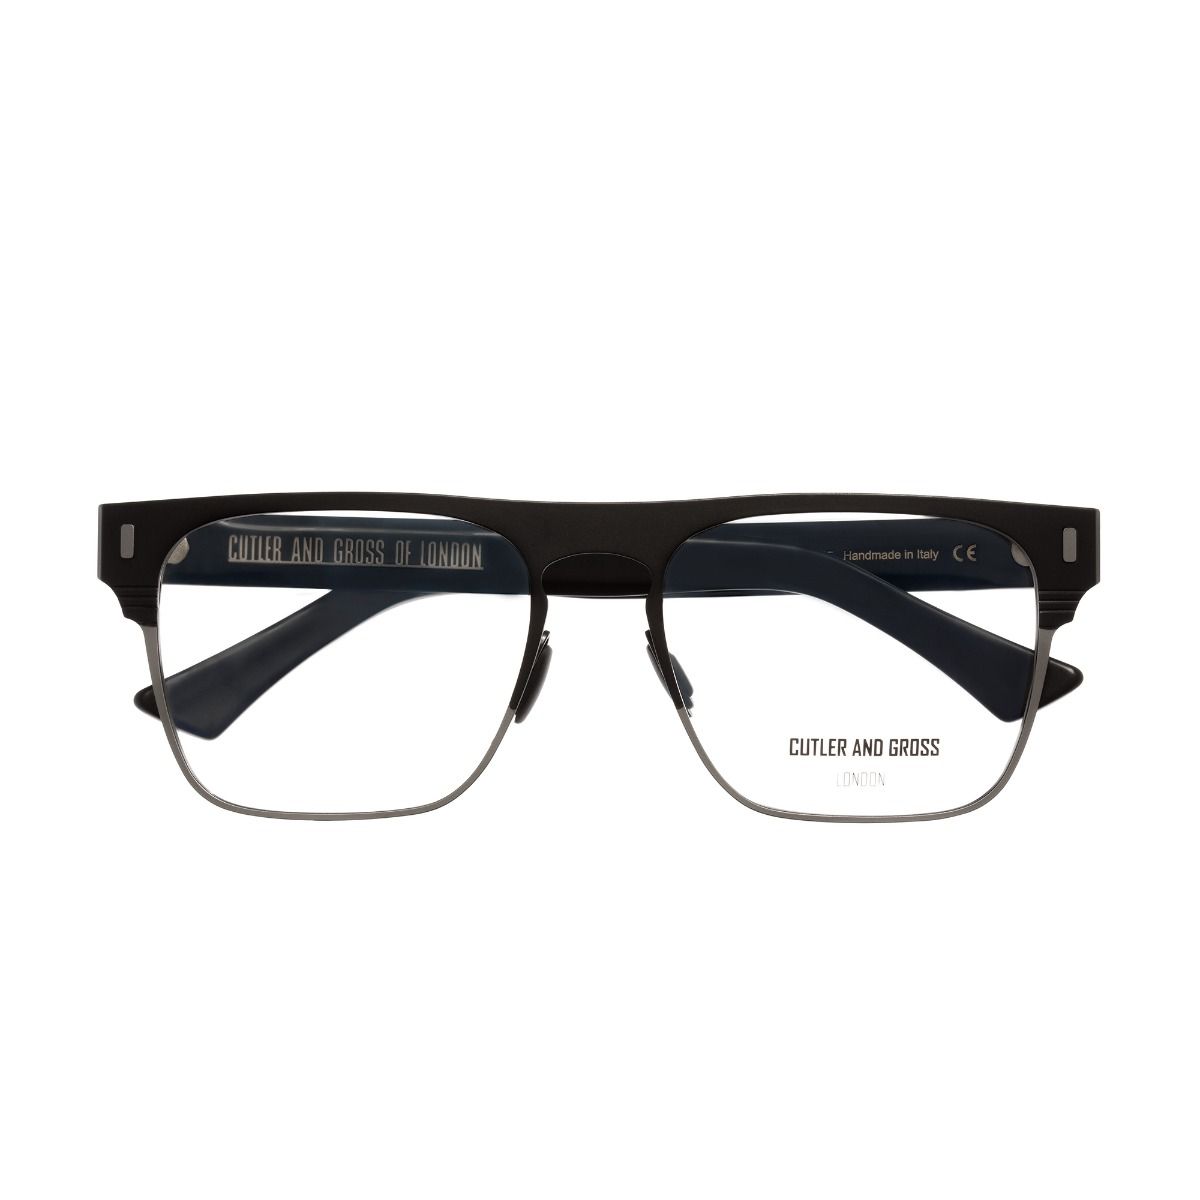 1366 Optical Square Glasses-Black